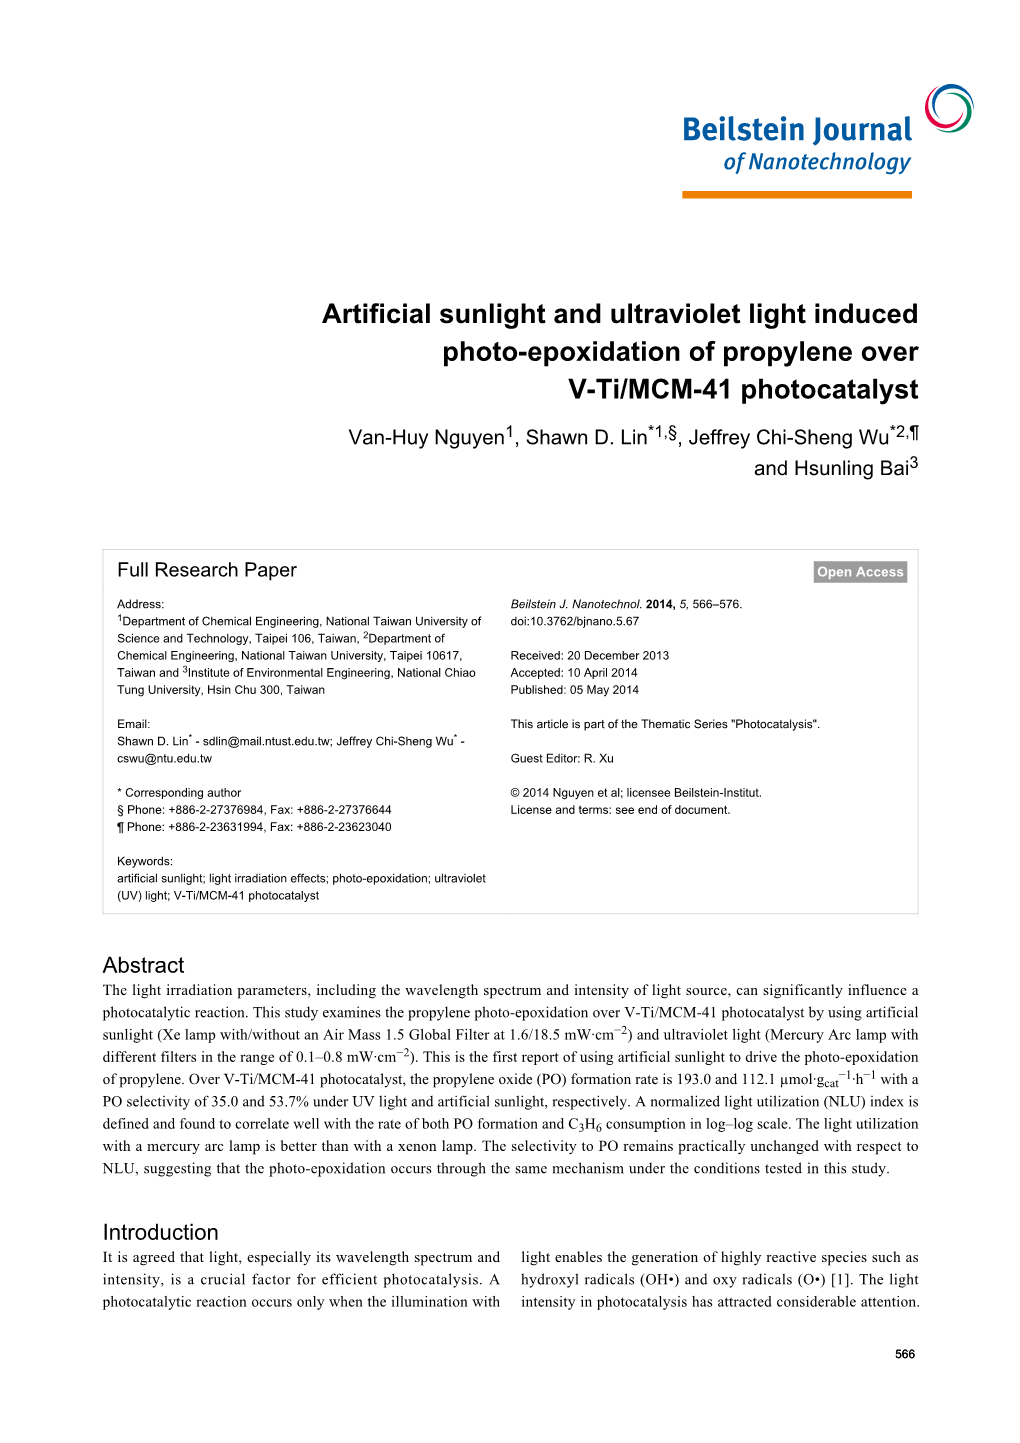 Artificial Sunlight and Ultraviolet Light Induced Photo-Epoxidation of Propylene Over V-Ti/MCM-41 Photocatalyst